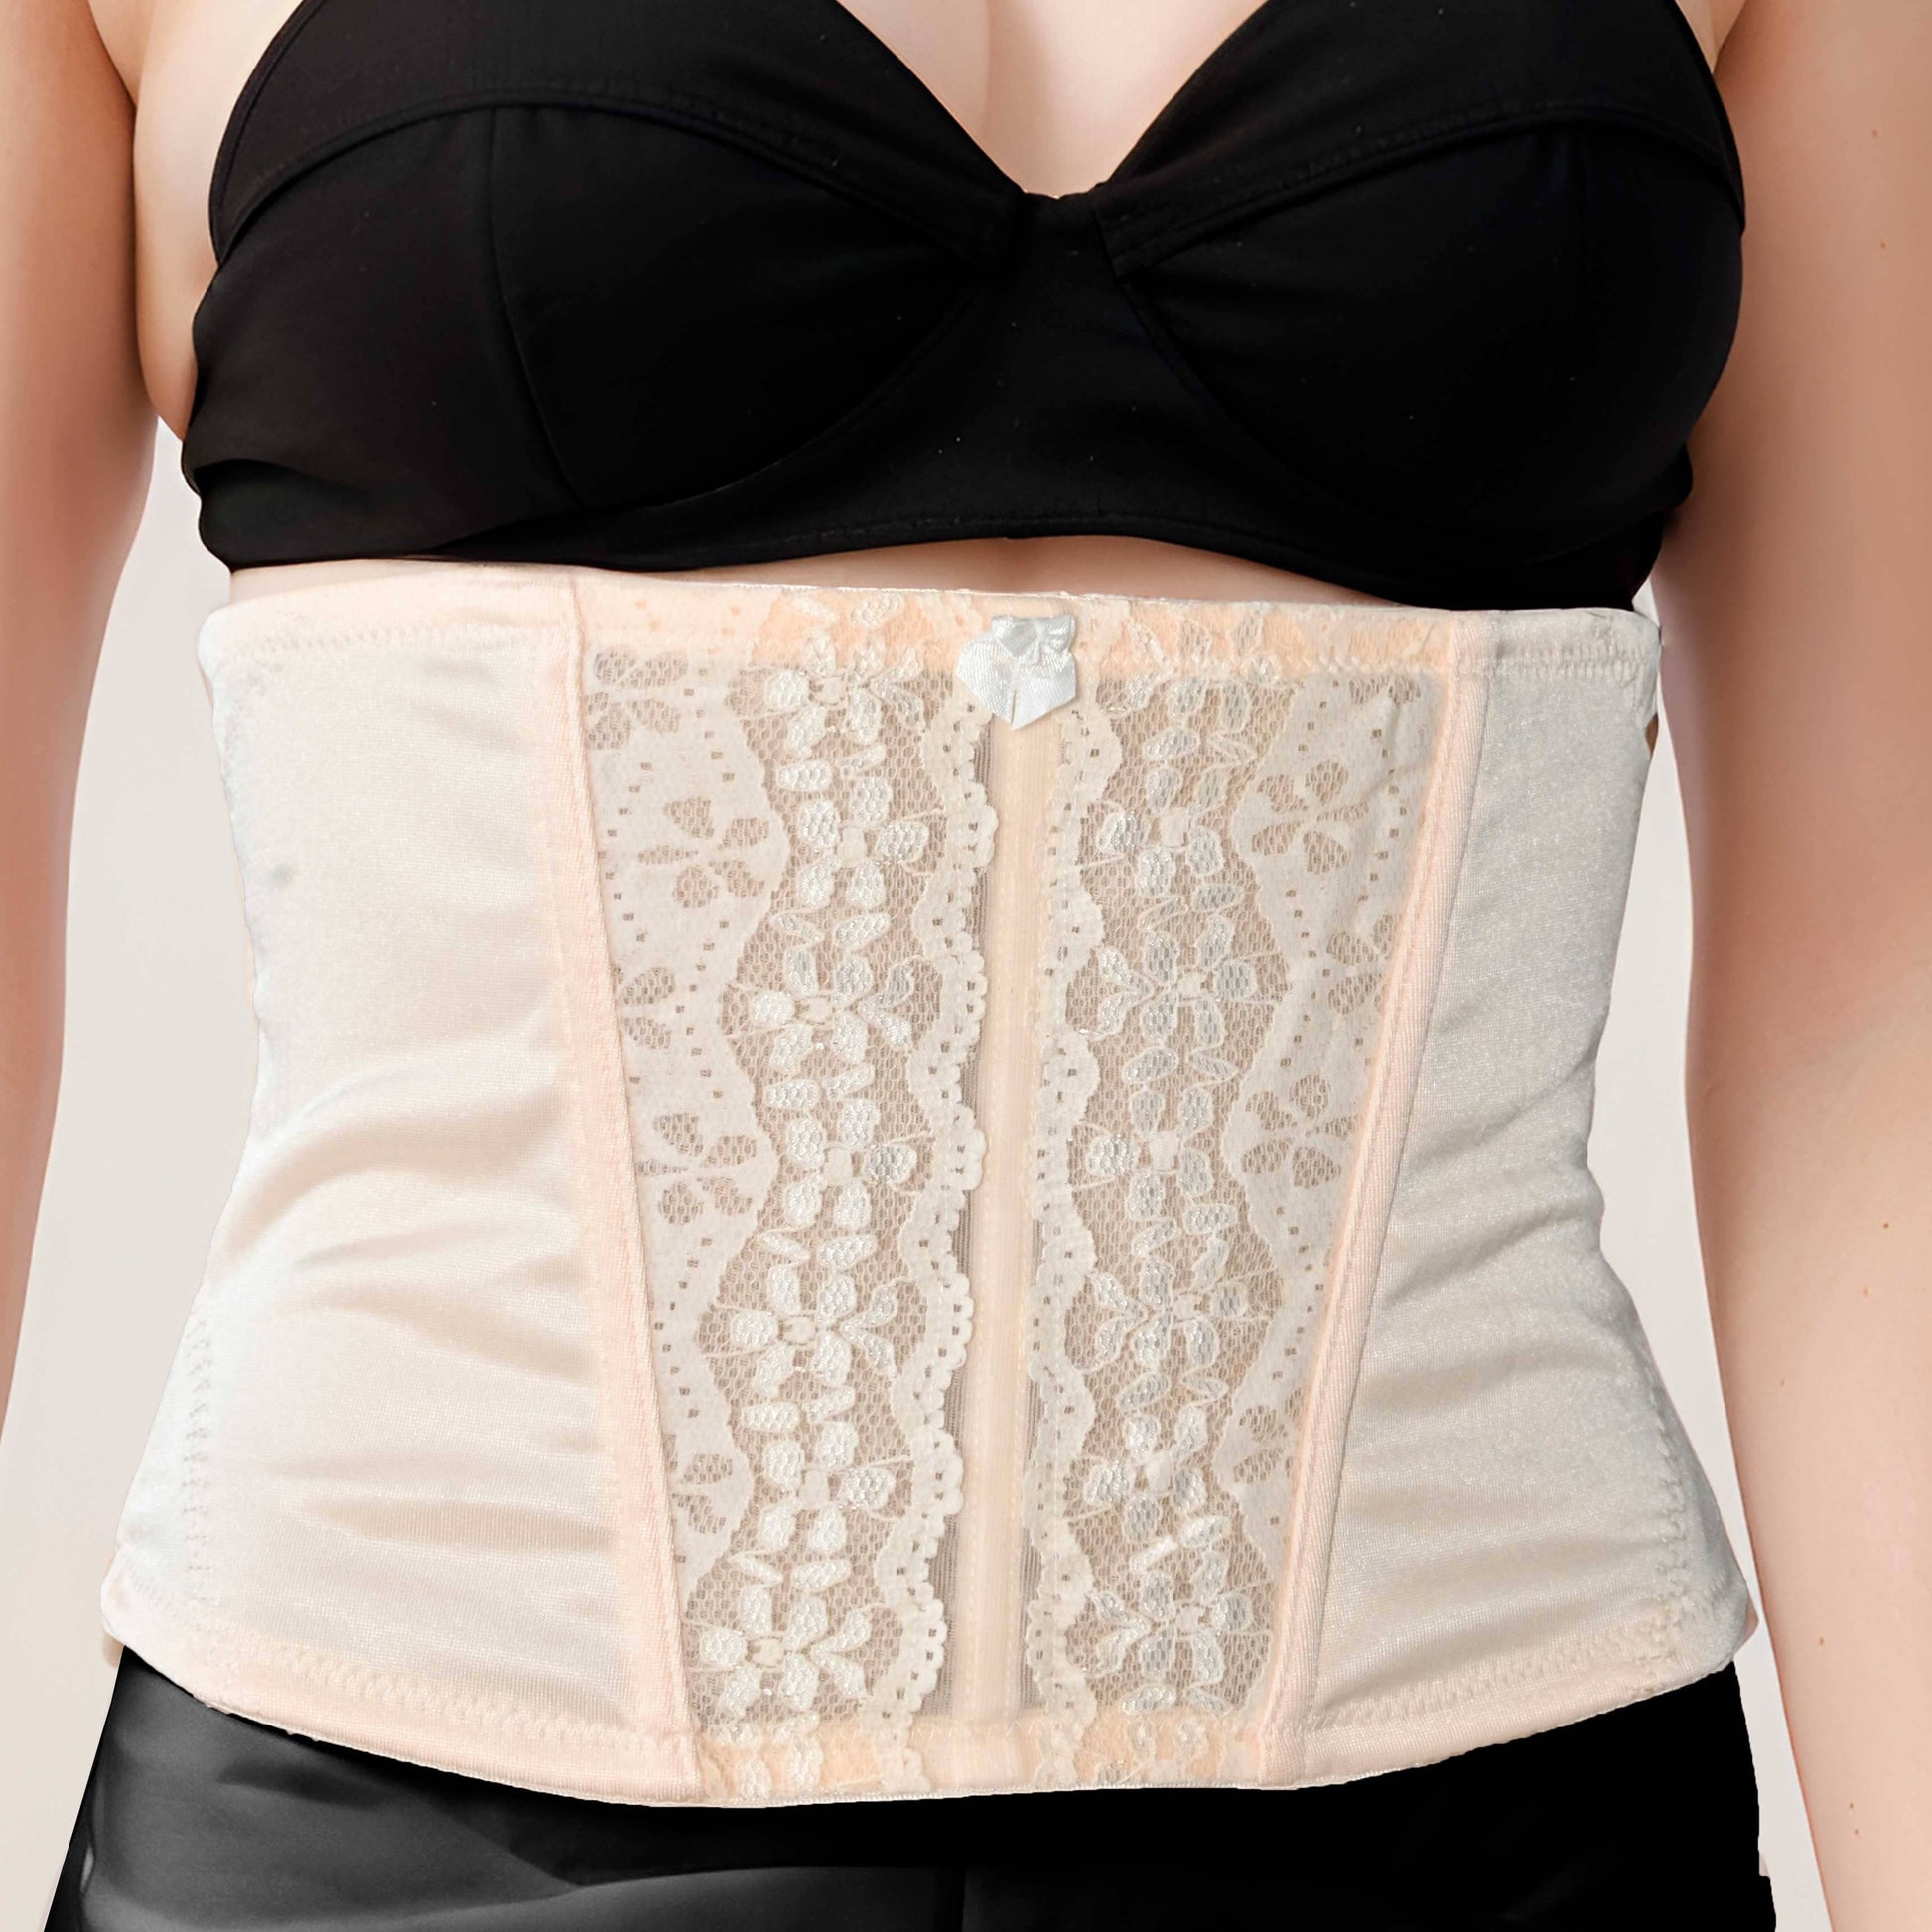 Women's Body Shaper Tummy Control Waist Belt